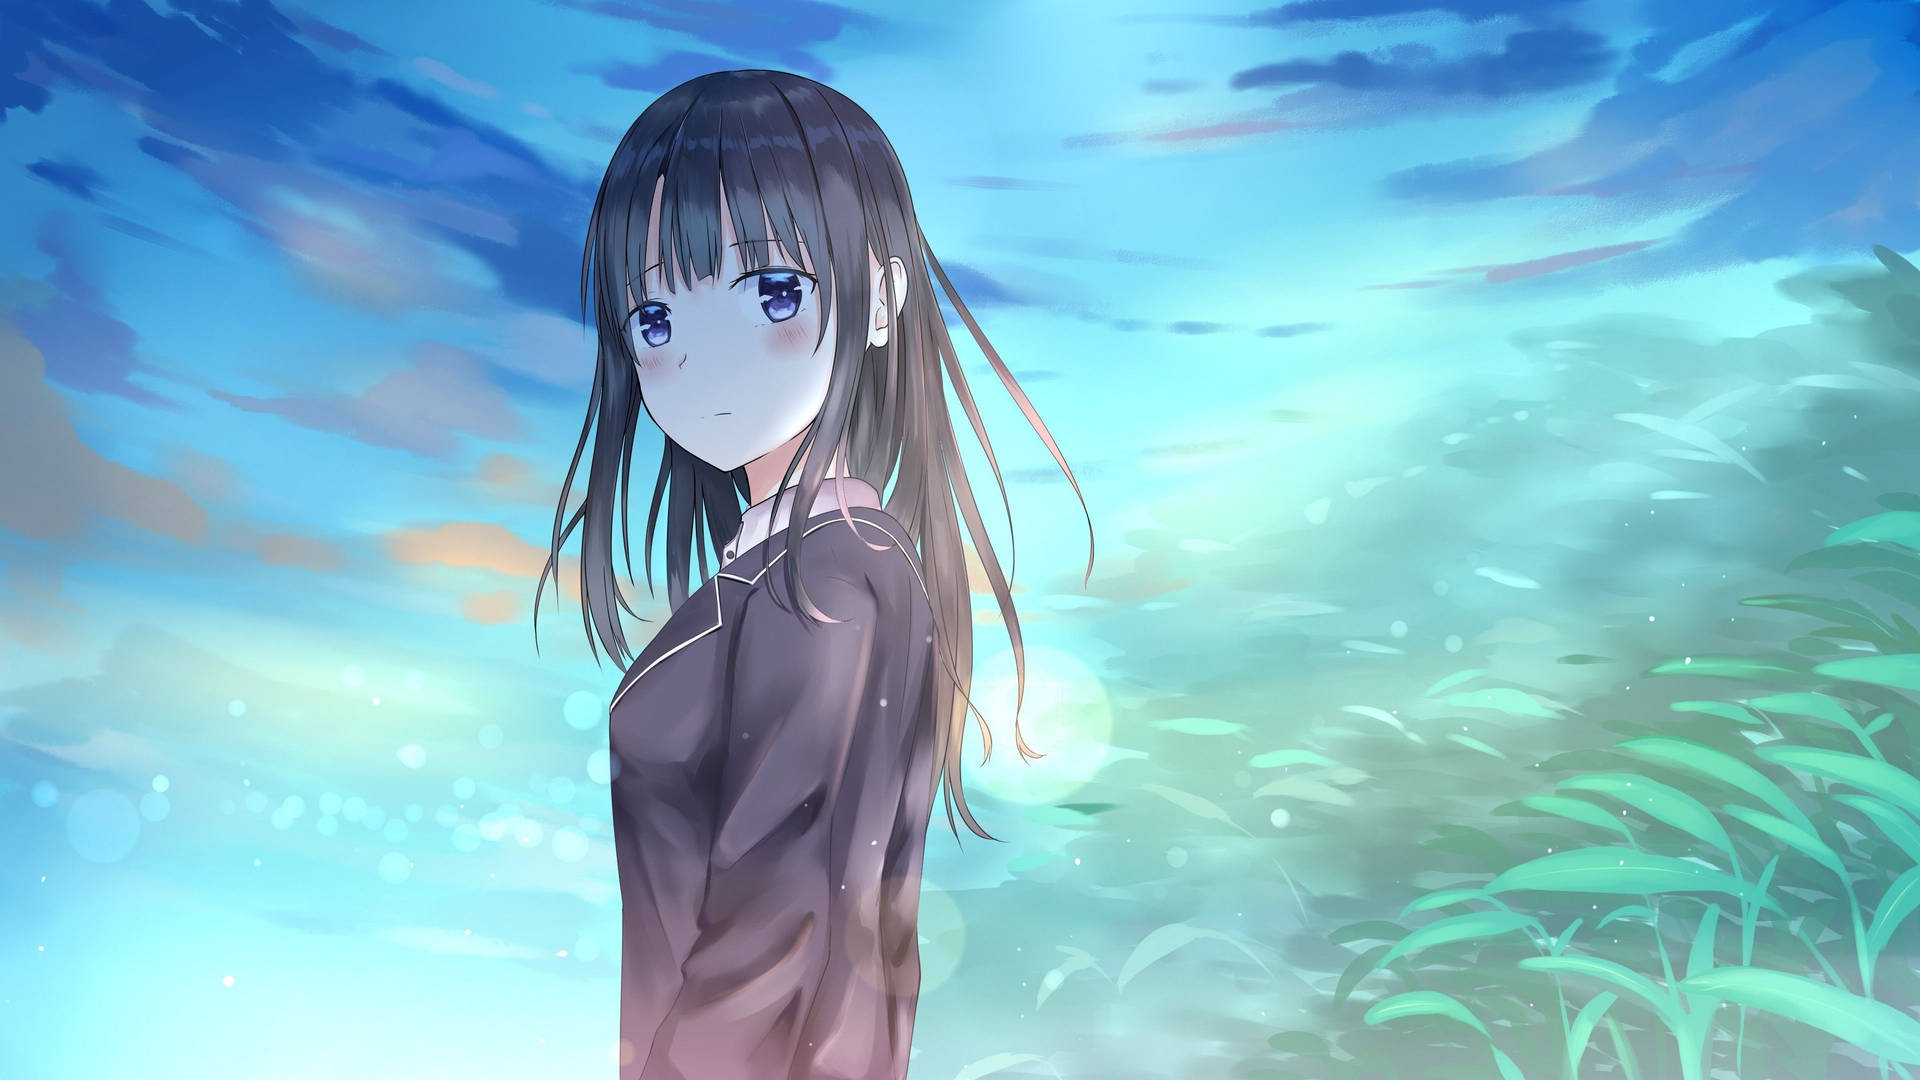 Curious Sad Anime Girl Looking Back Wallpaper